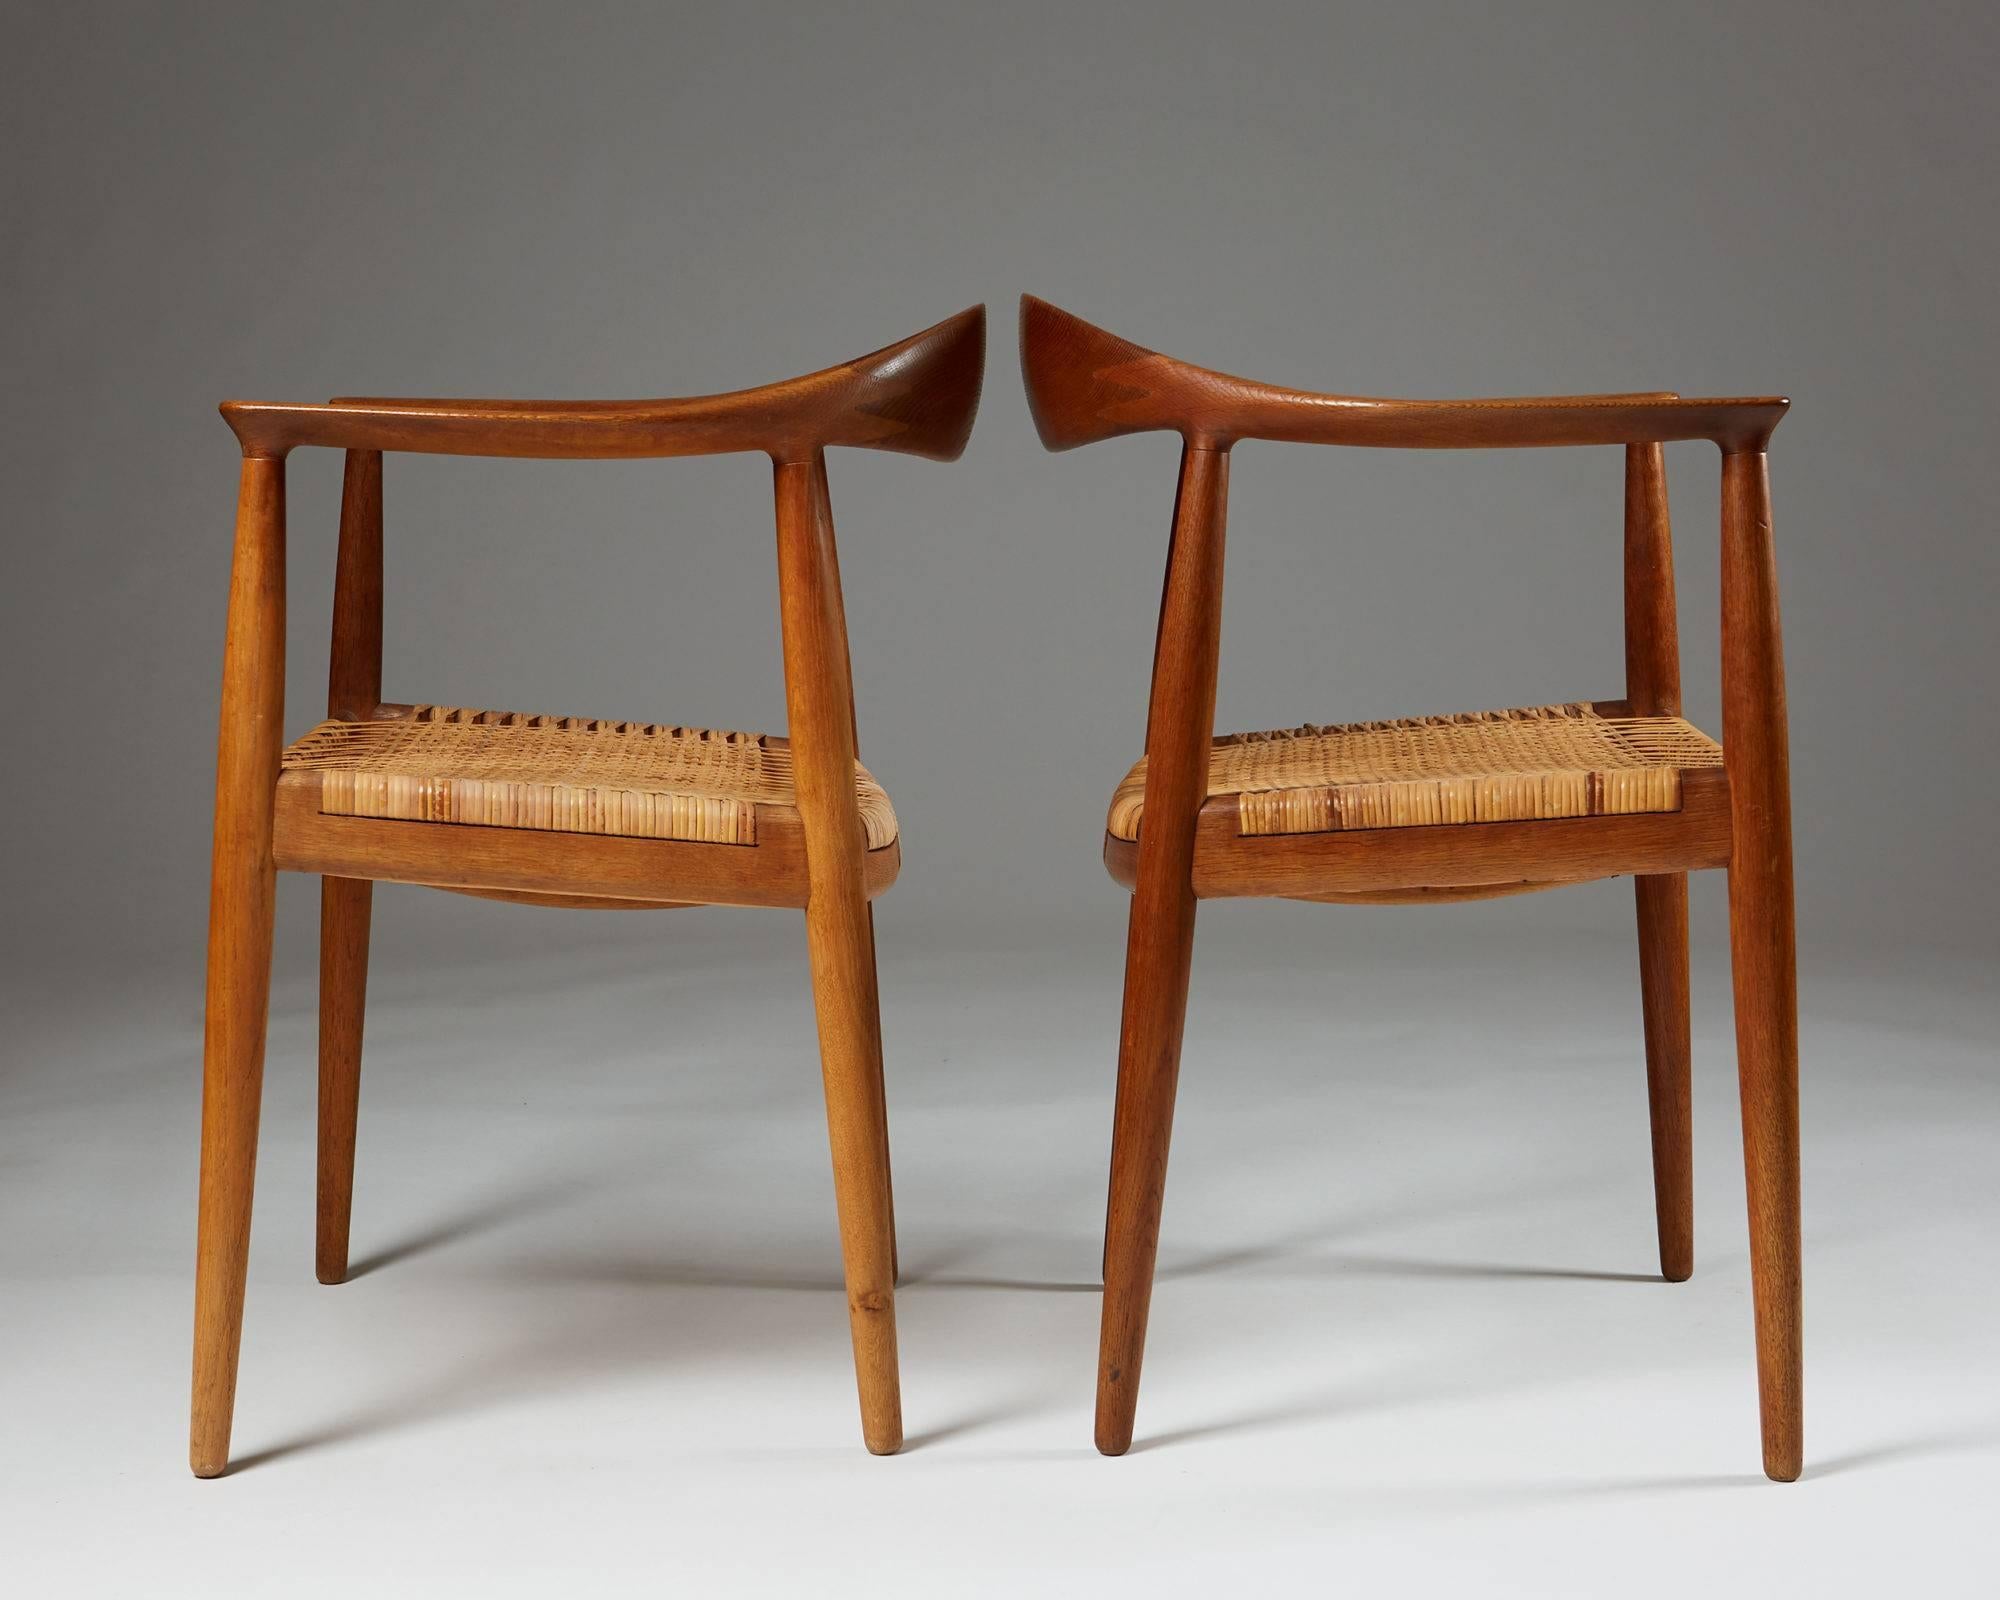 Scandinavian Modern Pair of Armchairs “The Chair” Designed by Hans J. Wegner, Denmark, 1949